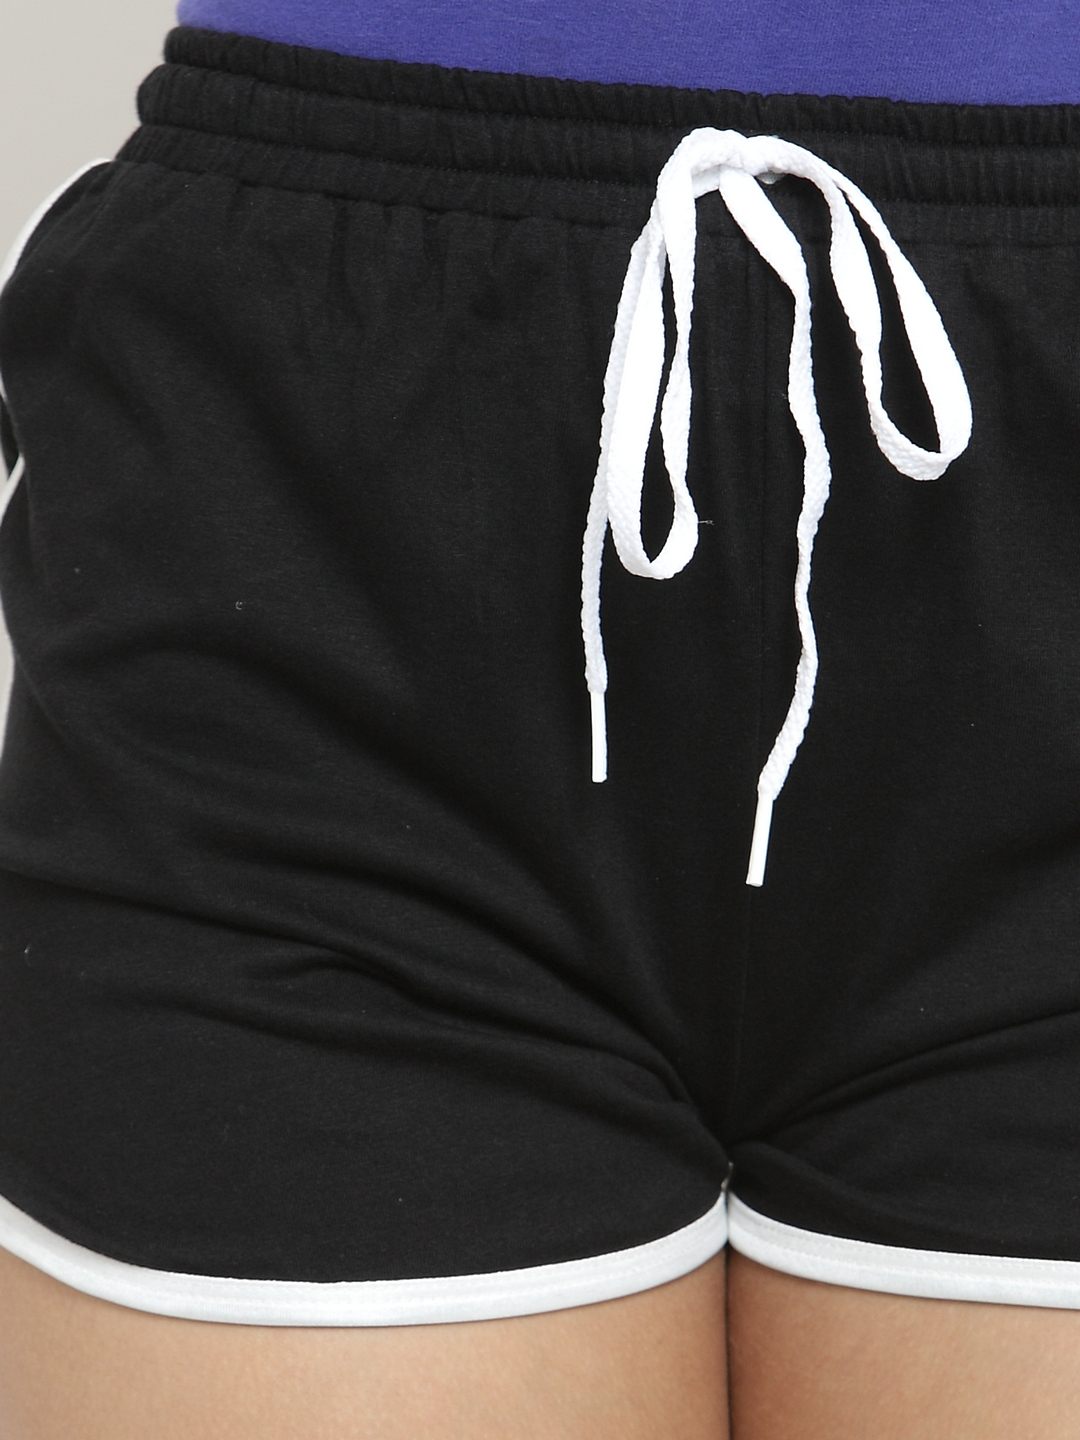 Black Color Solid Printed Cotton Shorts For Woman Claura Designs Pvt. Ltd. Lounge Shorts Black, Cotton, Lounge Short, Loungeshort_size, Shorts, Solid Printed, Women